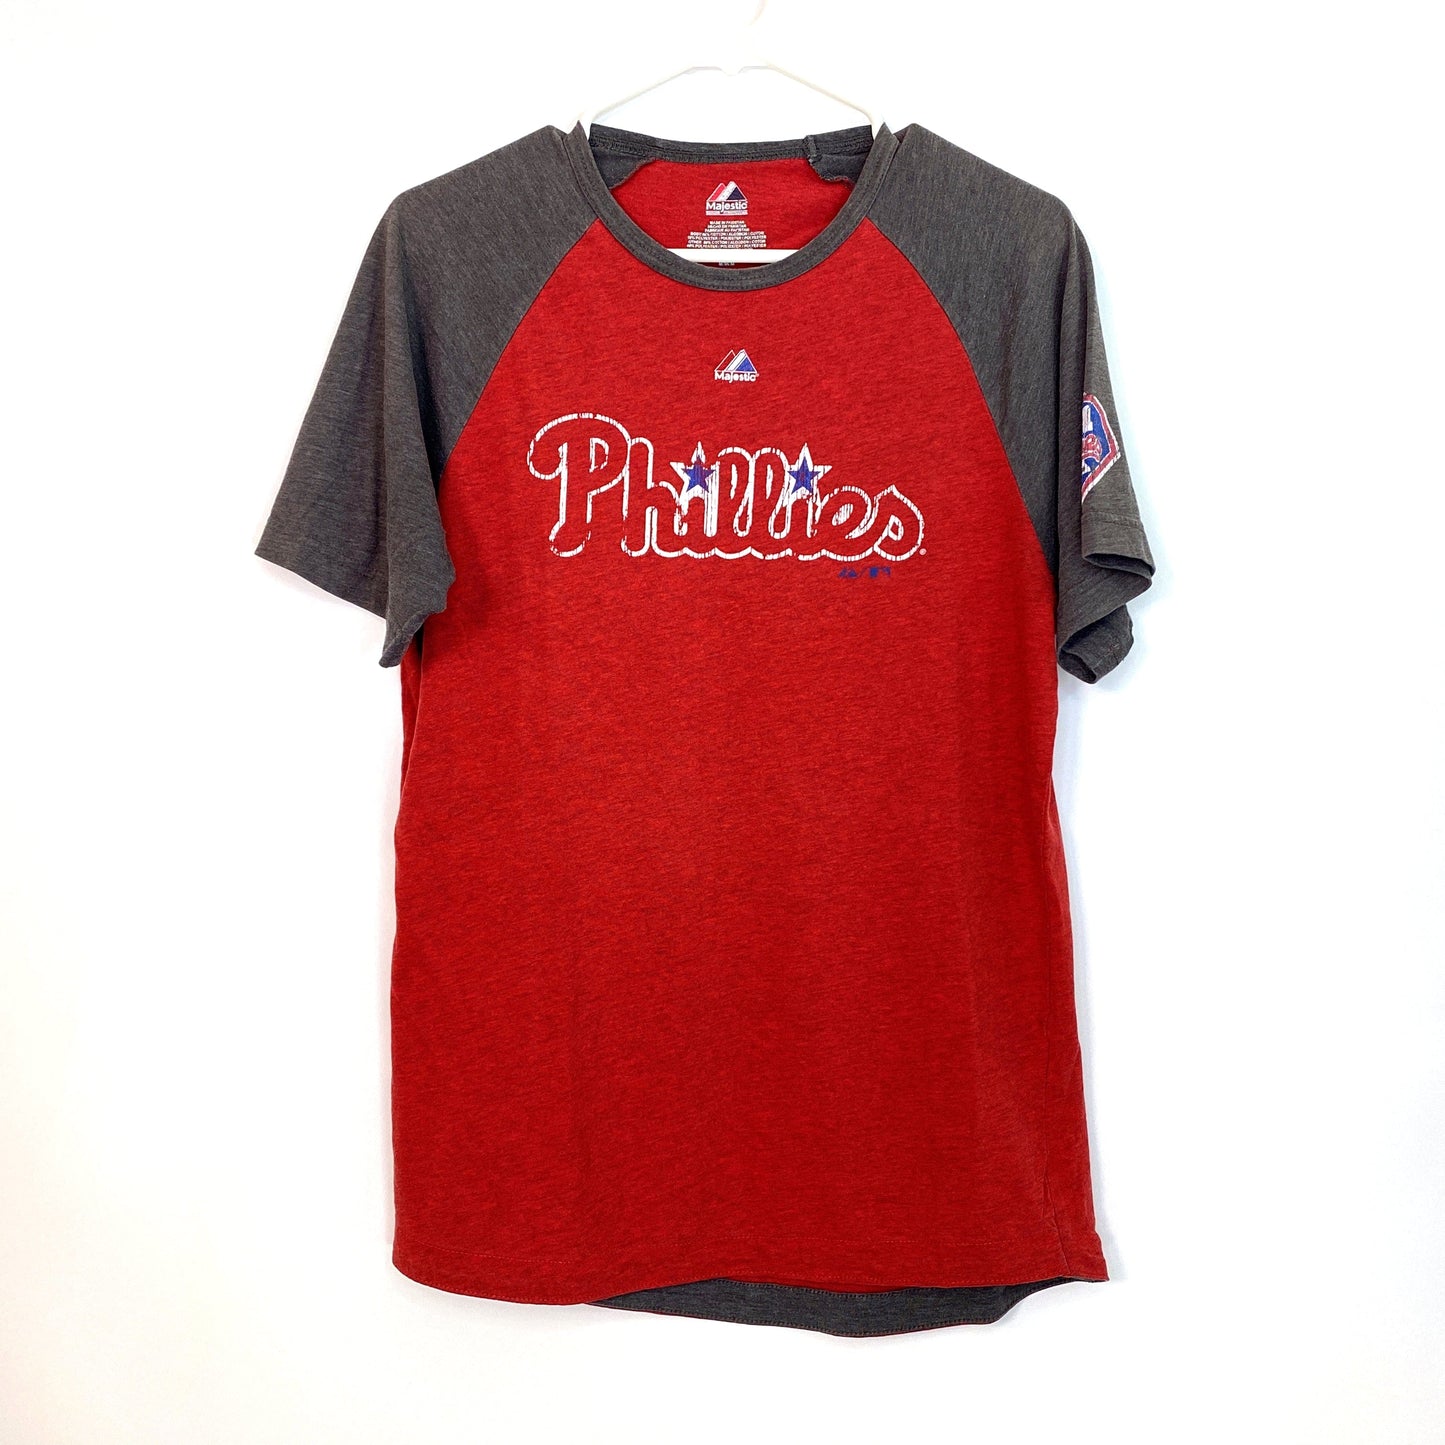 Majestic Mens Size M Red W/ Gray MLB PHILADELPHIA PHILLIES Raglan Sleeve T-Shirt